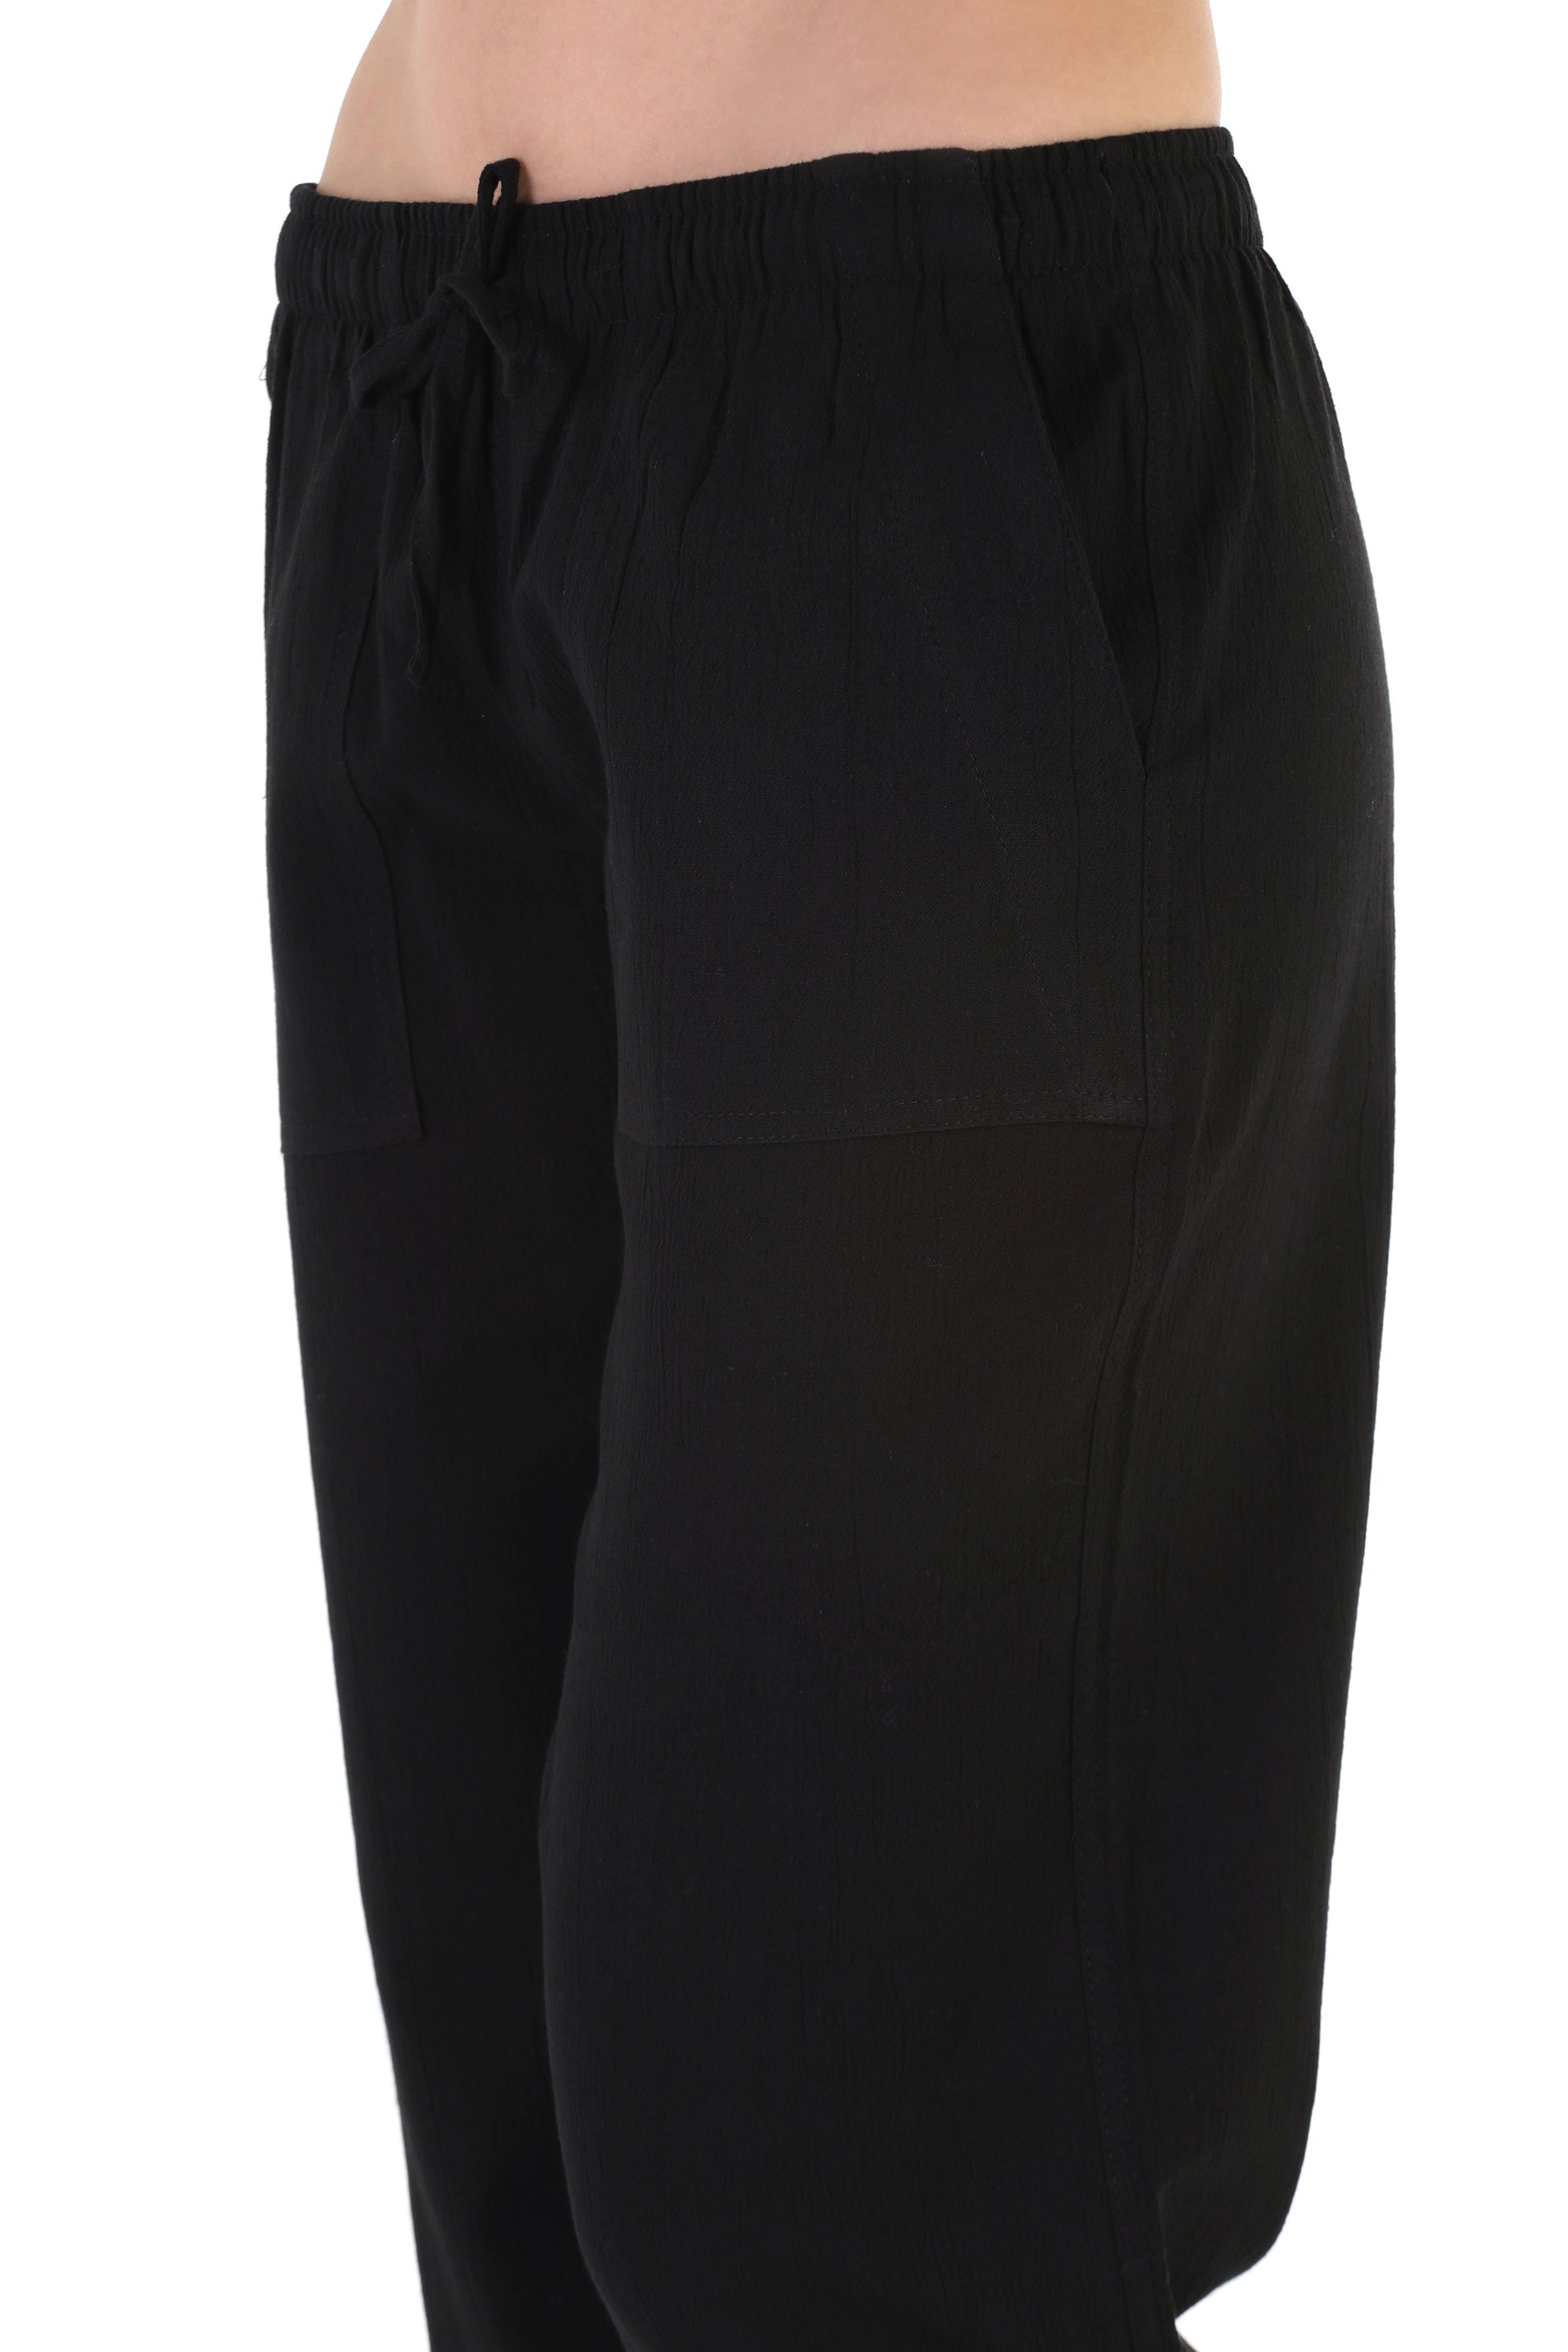 Njoeus Womens Casual Capris Pants, Women's Cotton High Waist Tie Belted  Cropped Trousers Linen Beach Capris Shorts Pockets for Women S-5XL  (Available